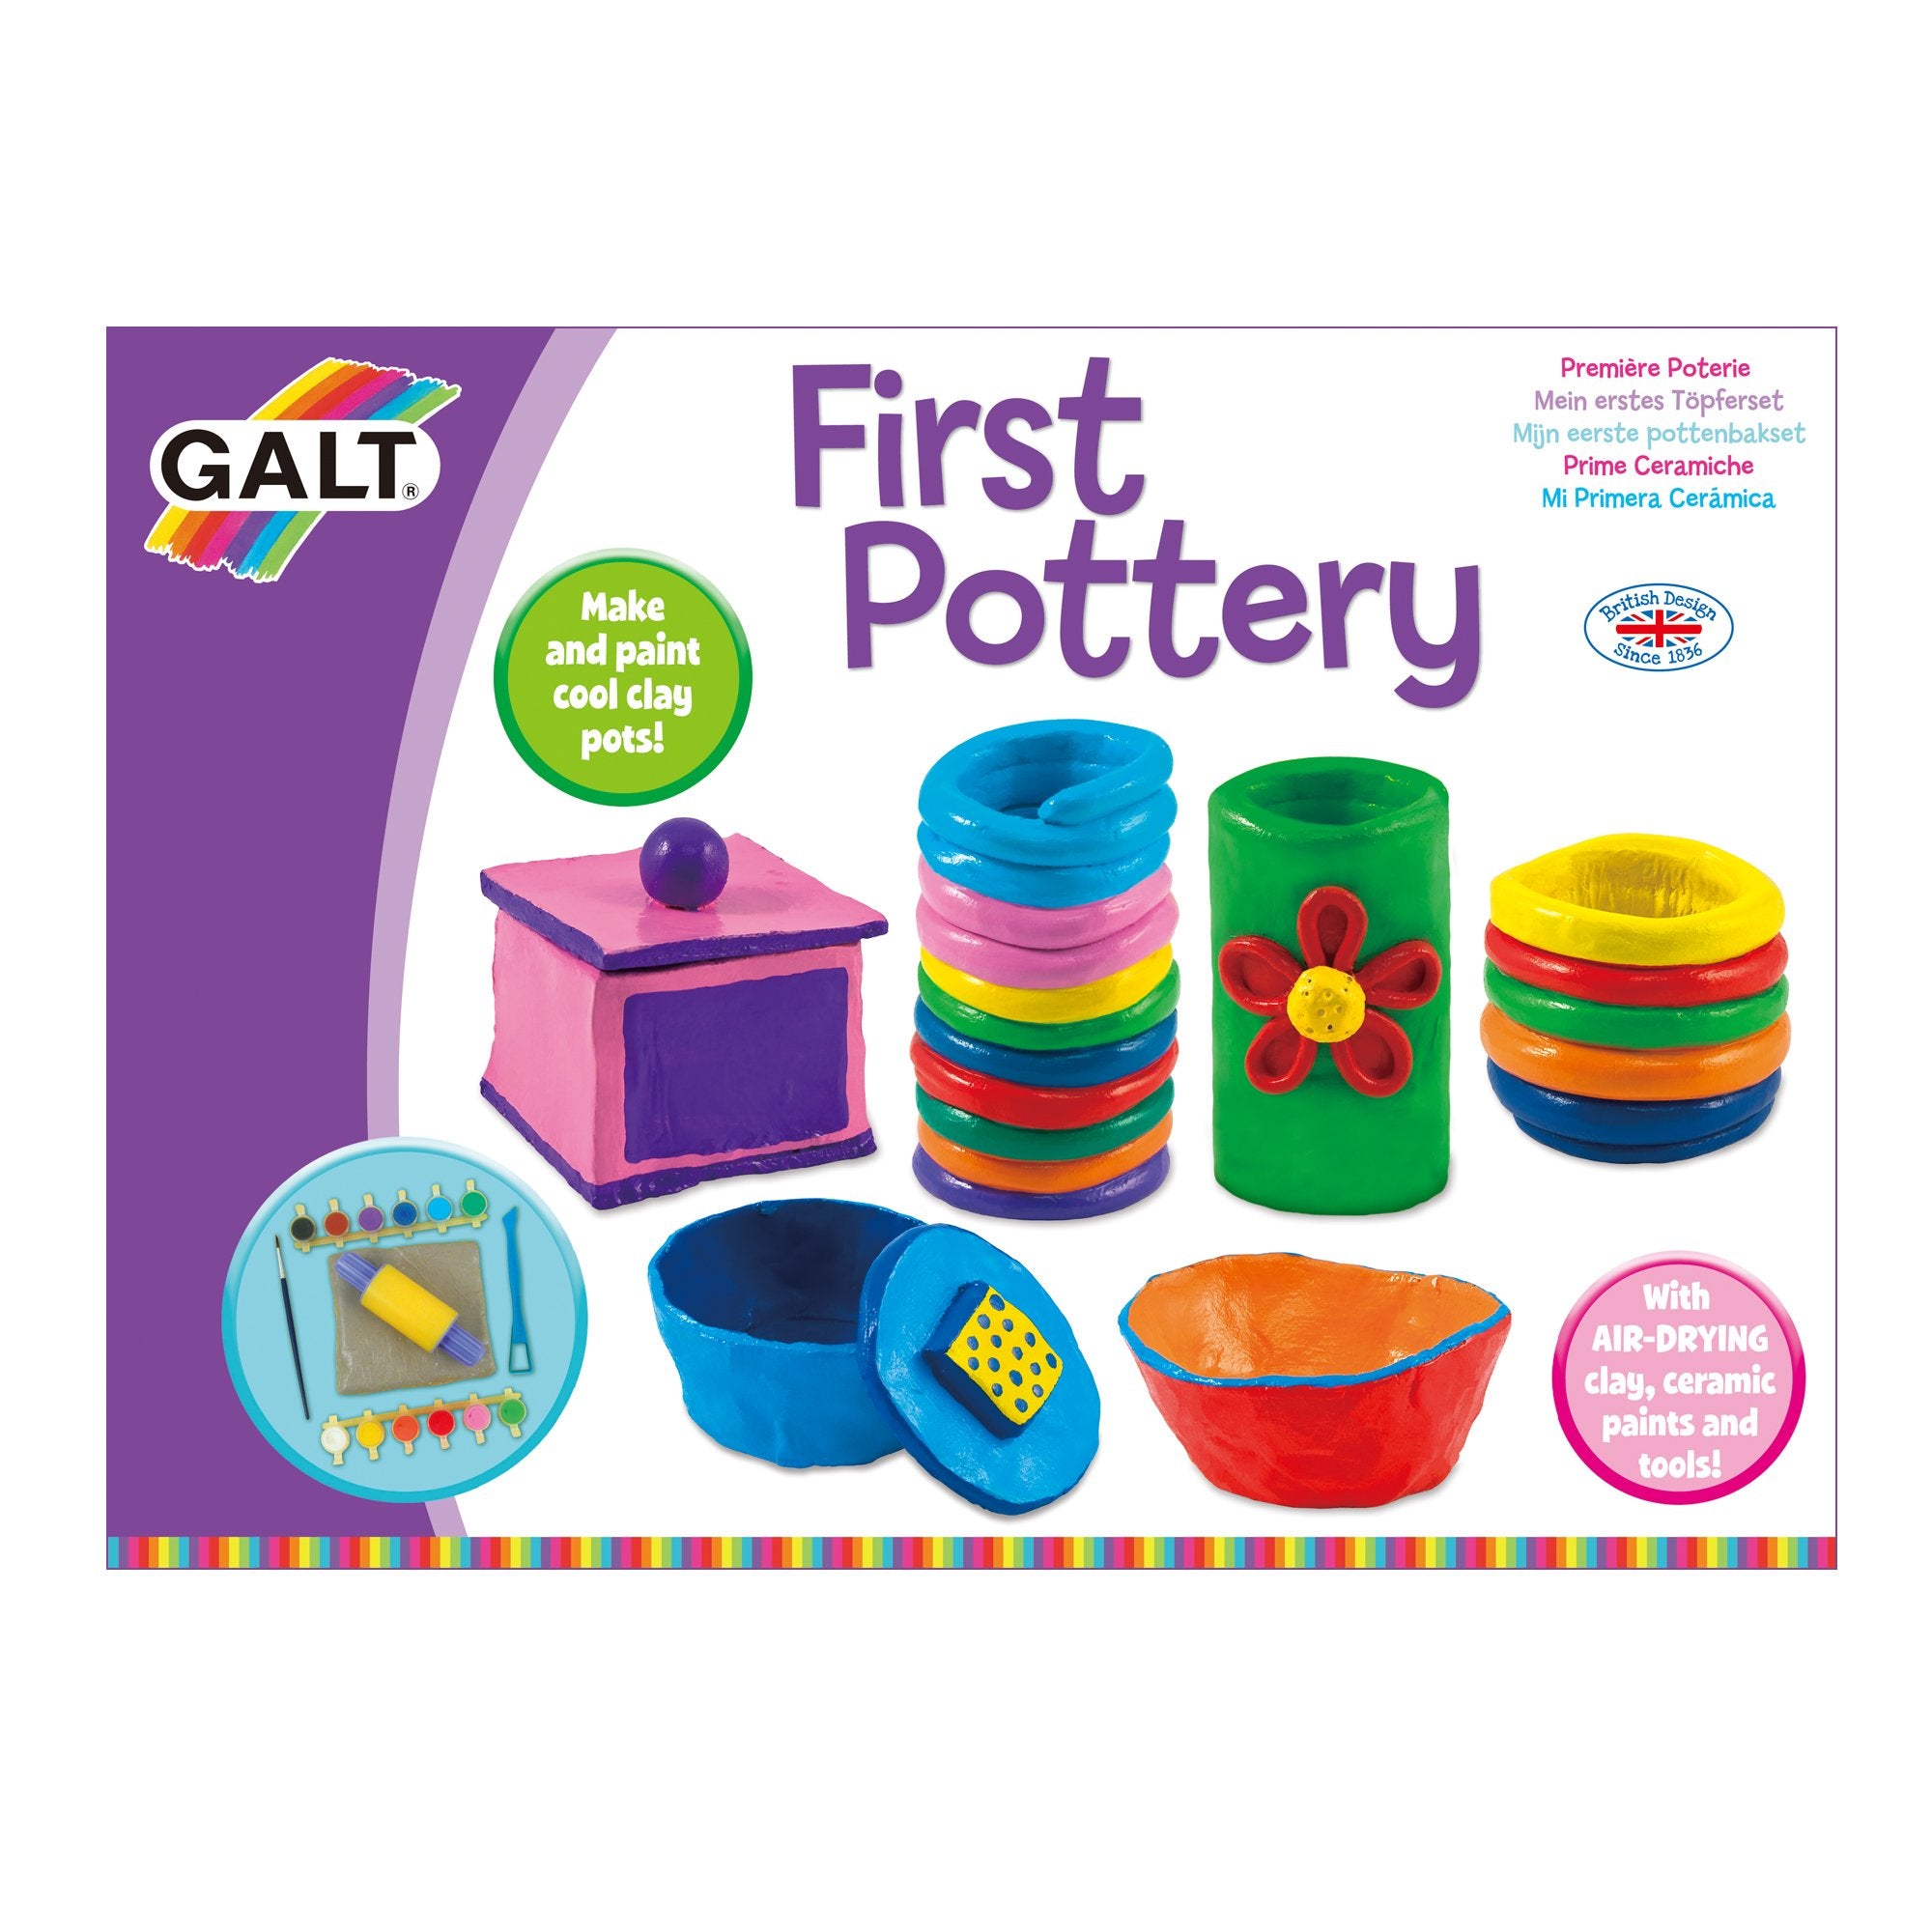 First Pottery Galt Toys Ireland